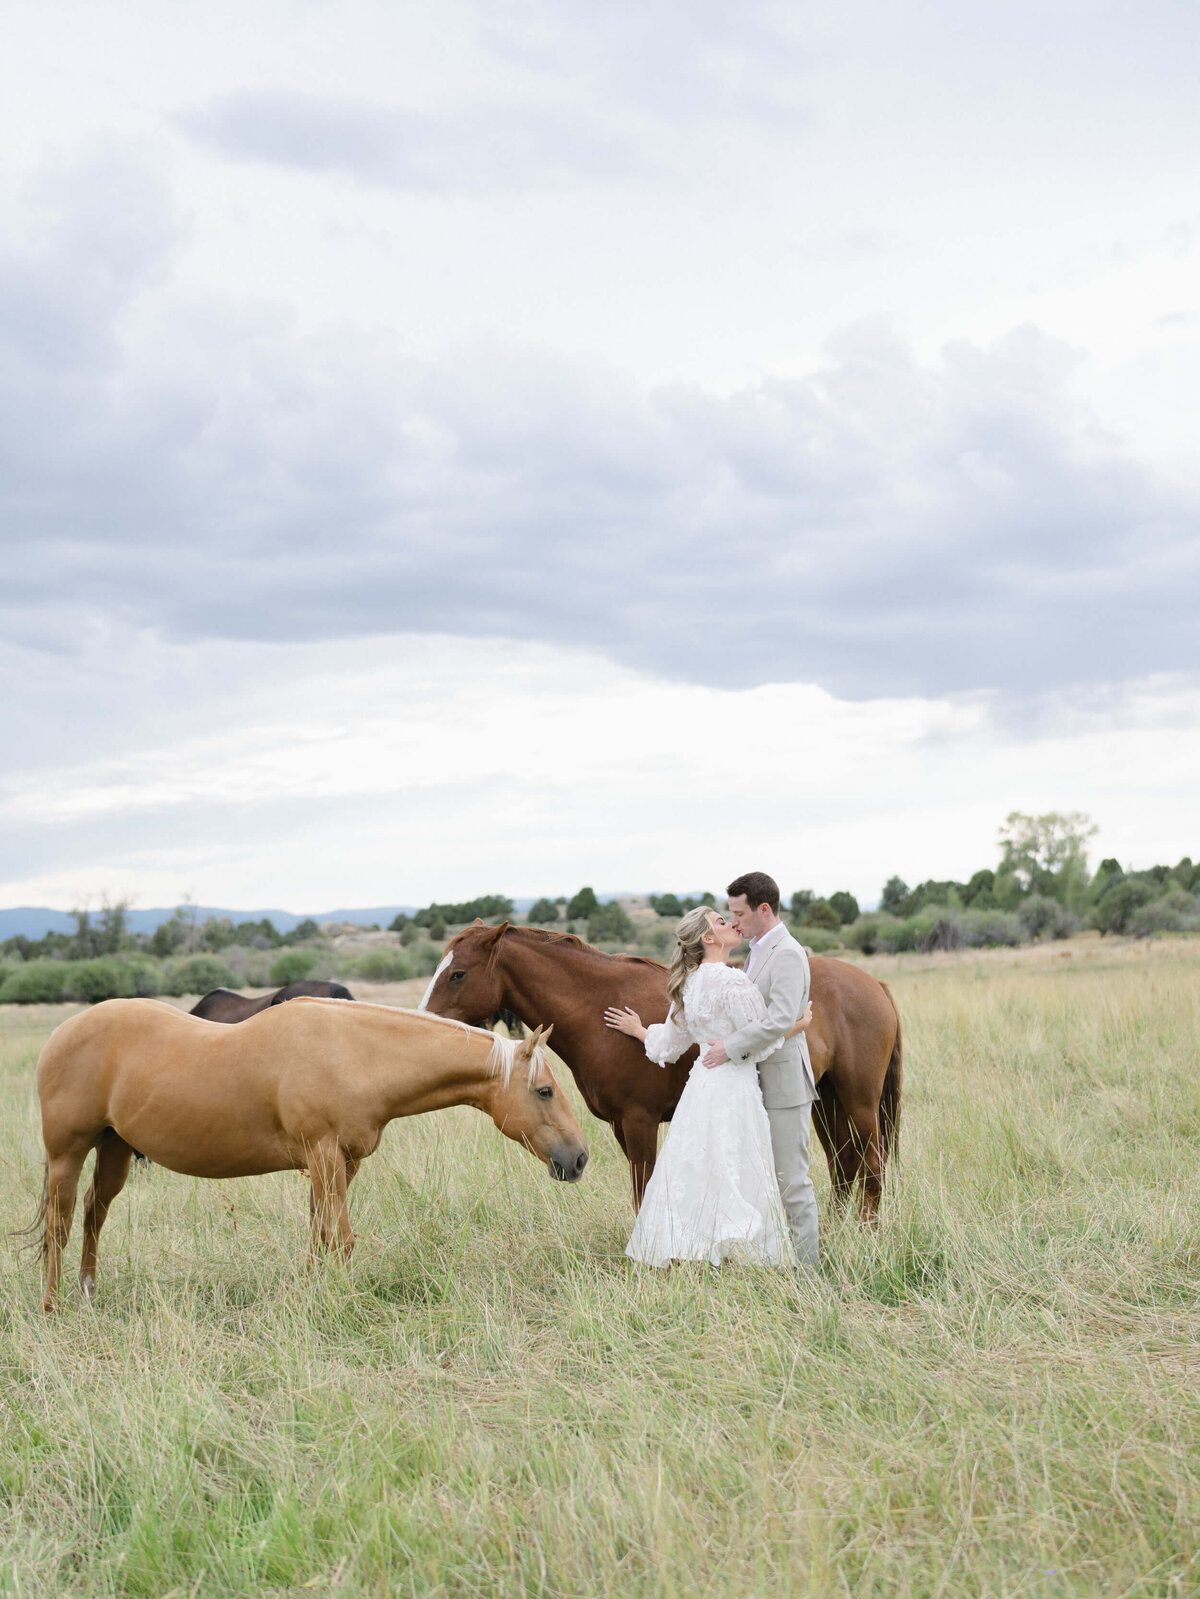 14-KT-Merry-Photography-Western-Wedding-Brush-Creek-Ranch-Horses